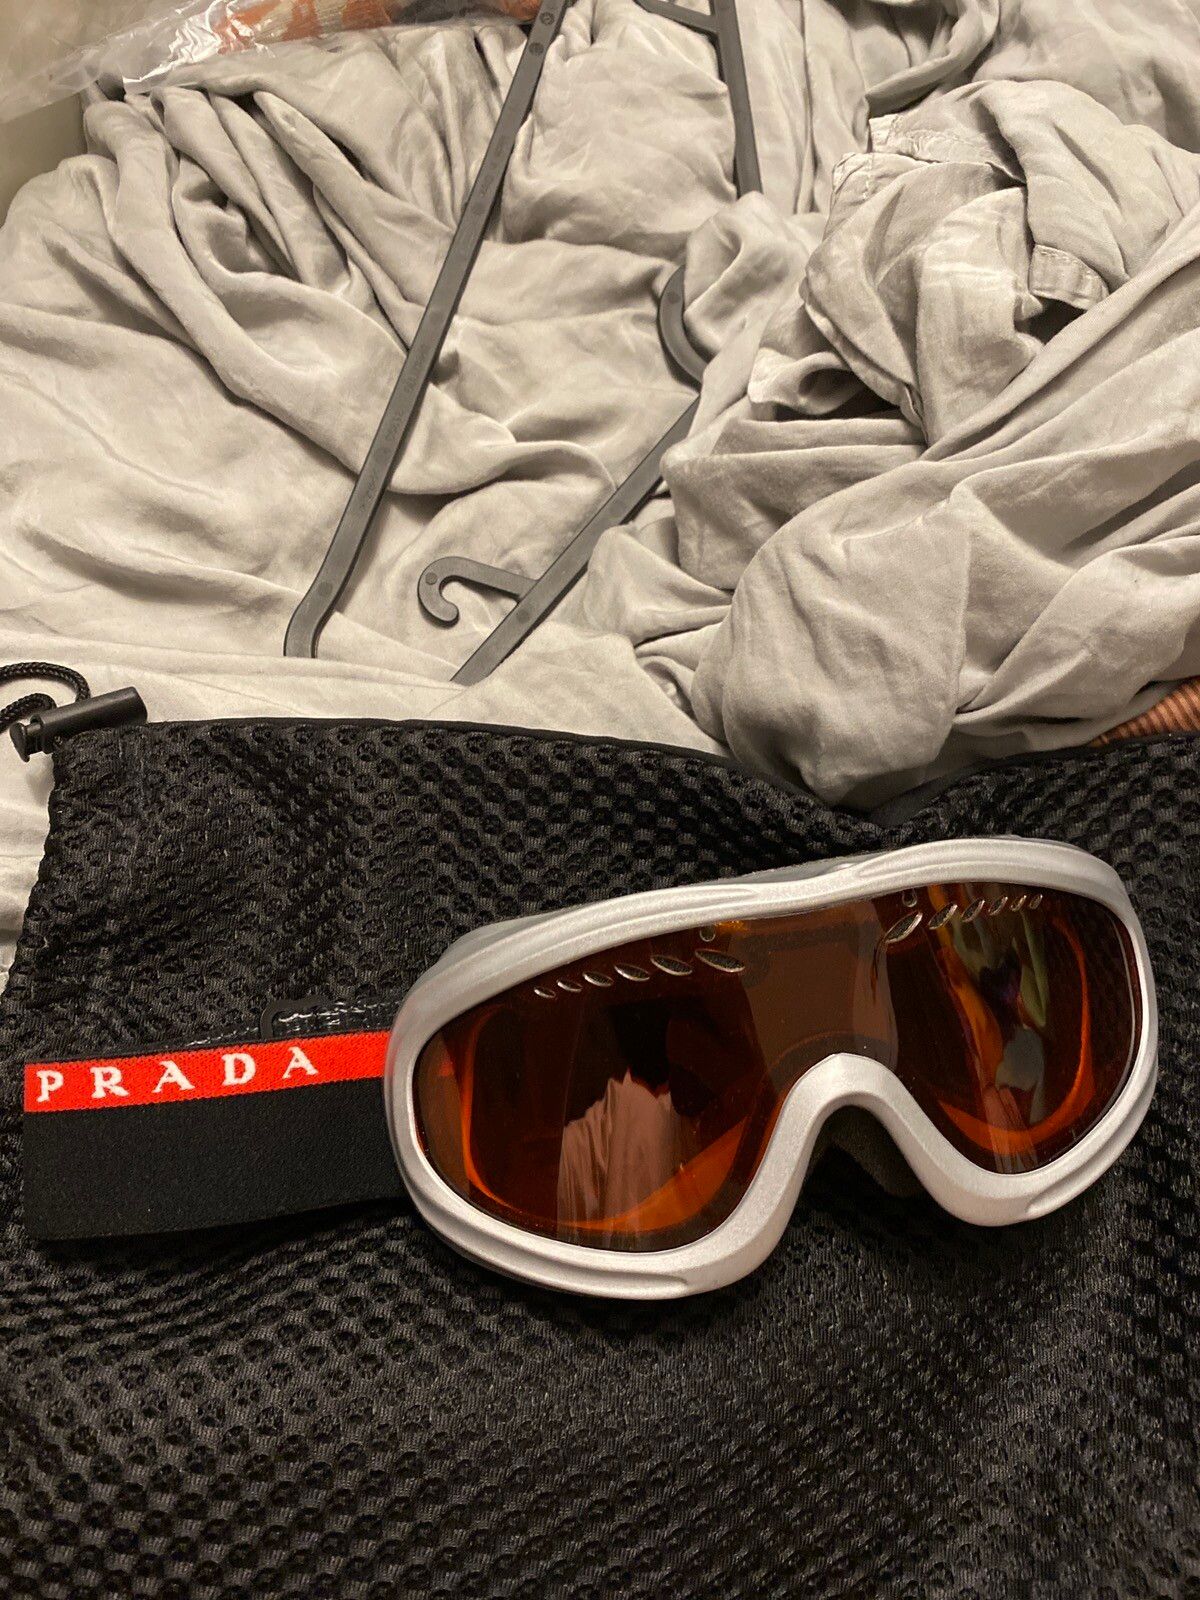 Prada Prada Ski Goggles | Grailed